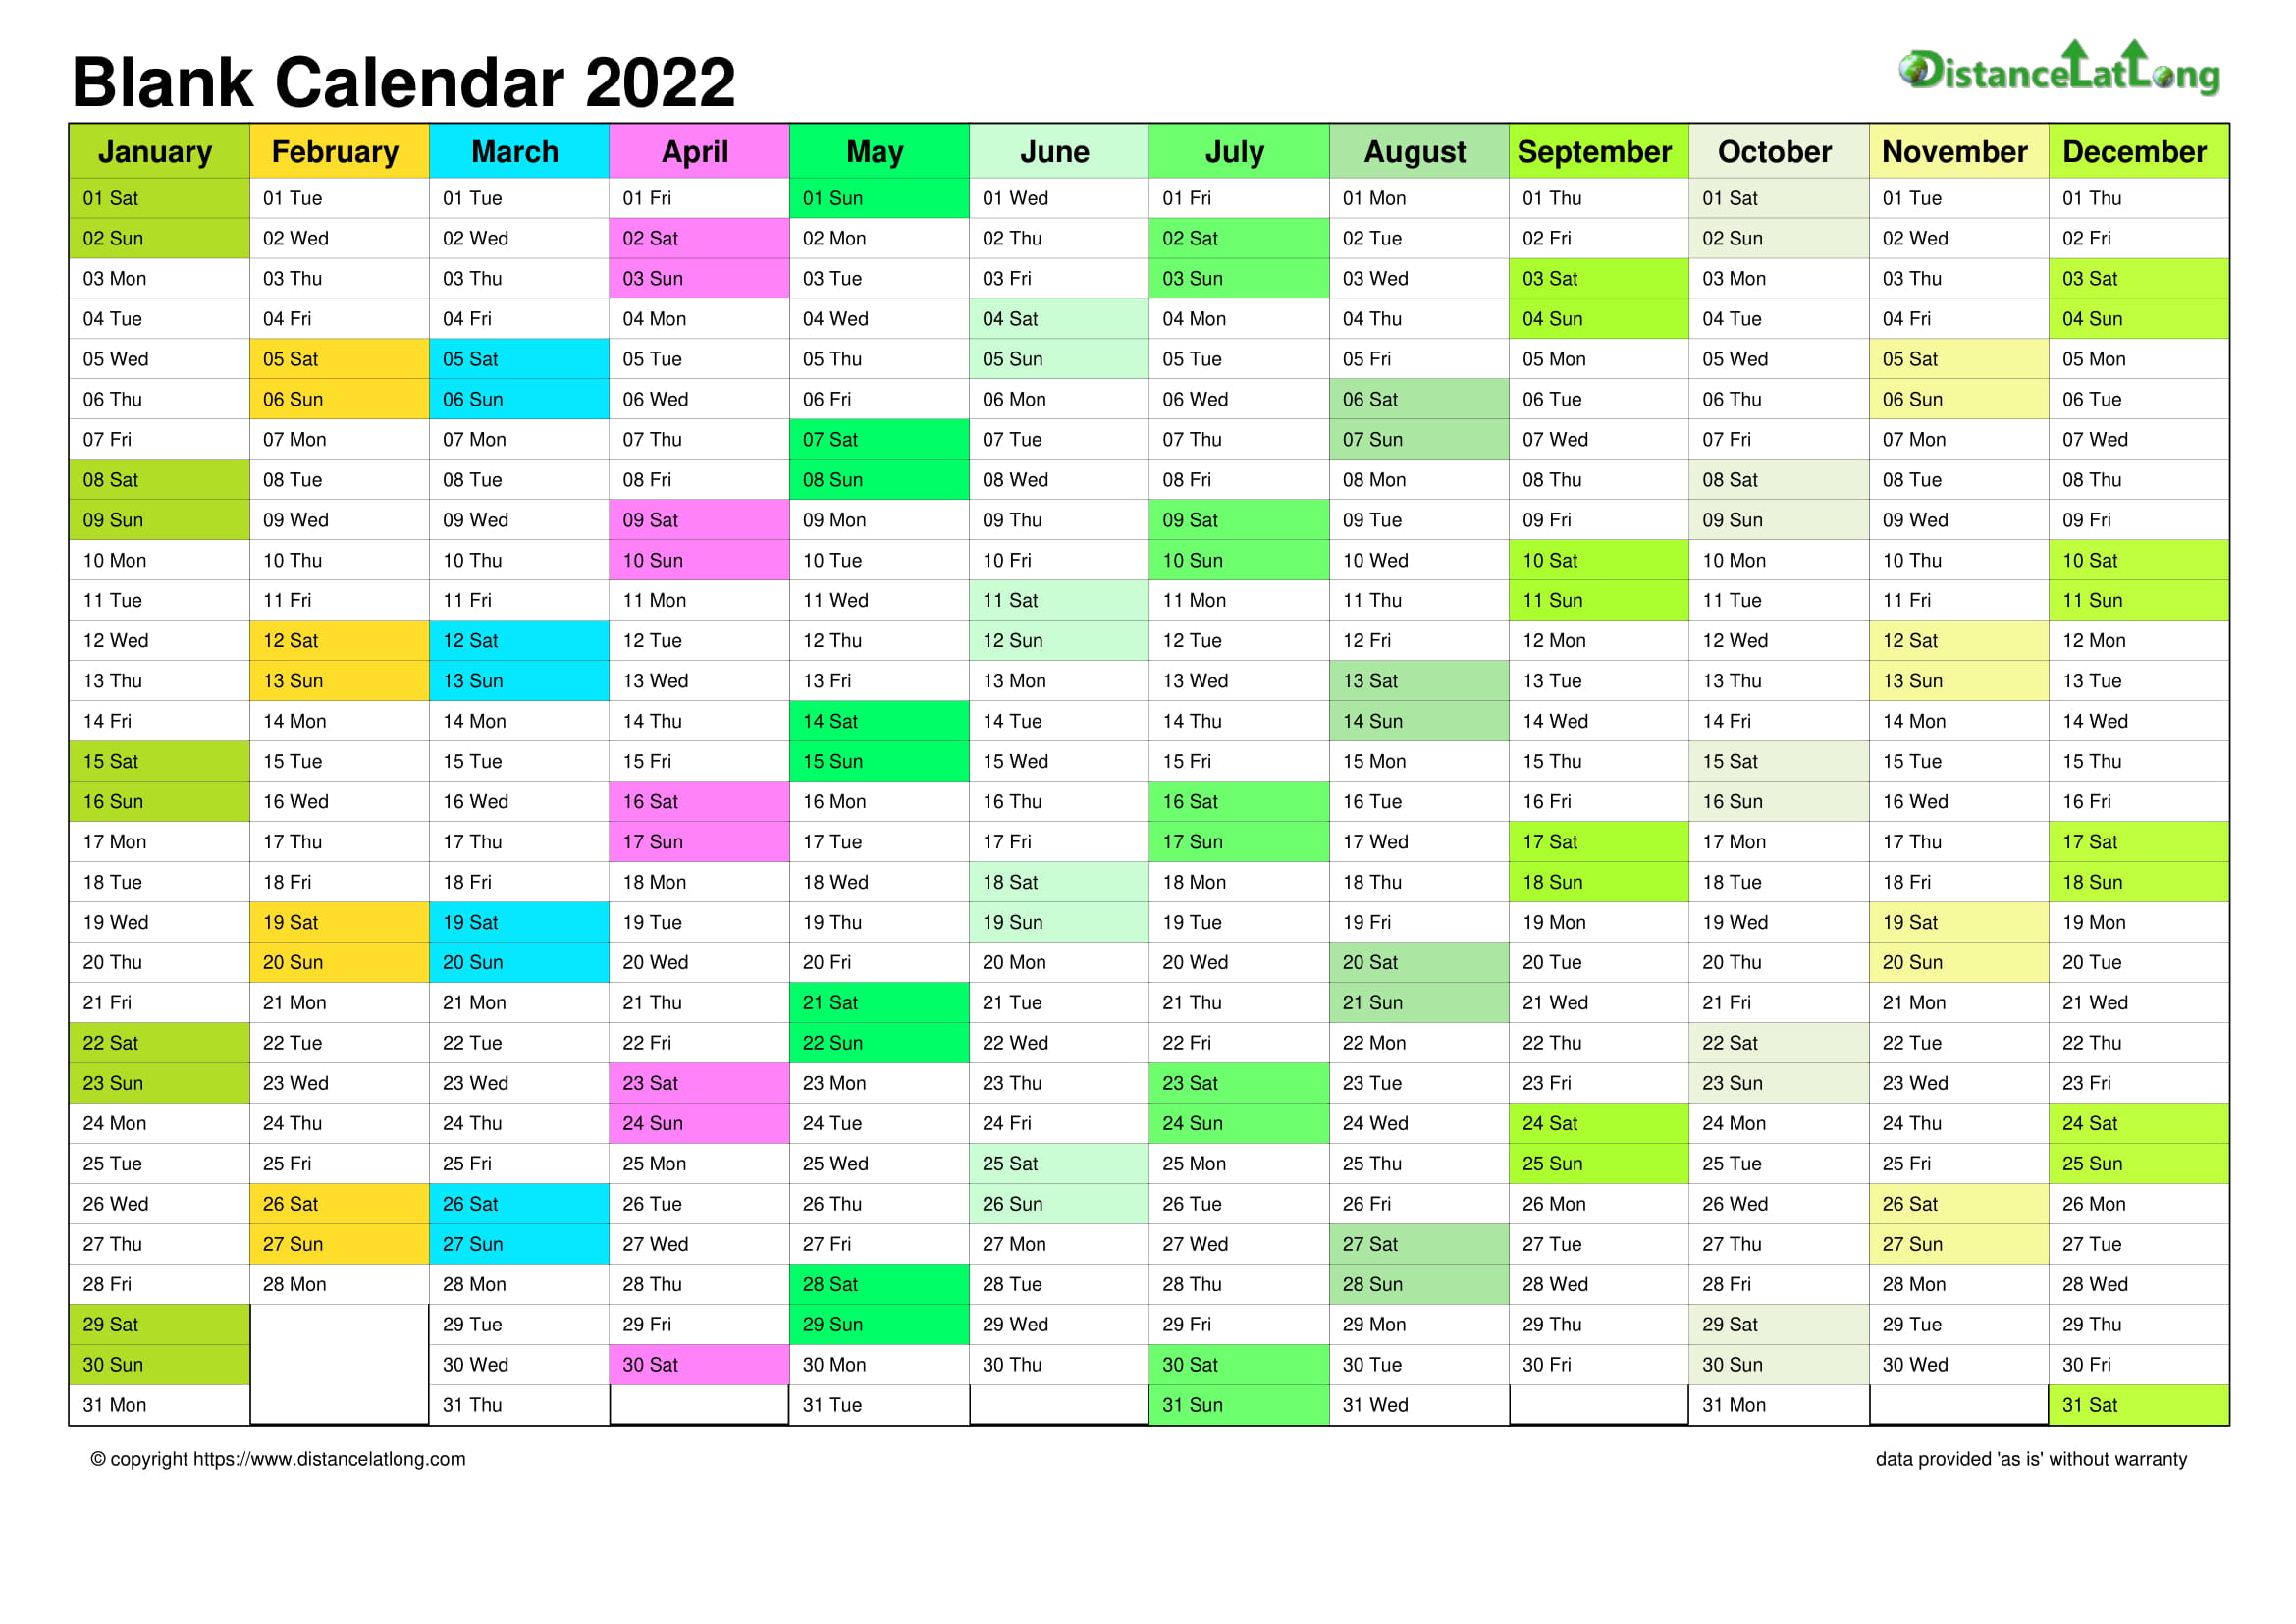 Empty Calendar 2022 2022 Blank Calendar Landscape Orientation Free Printable Templates - Free  Download - Distancelatlong.com